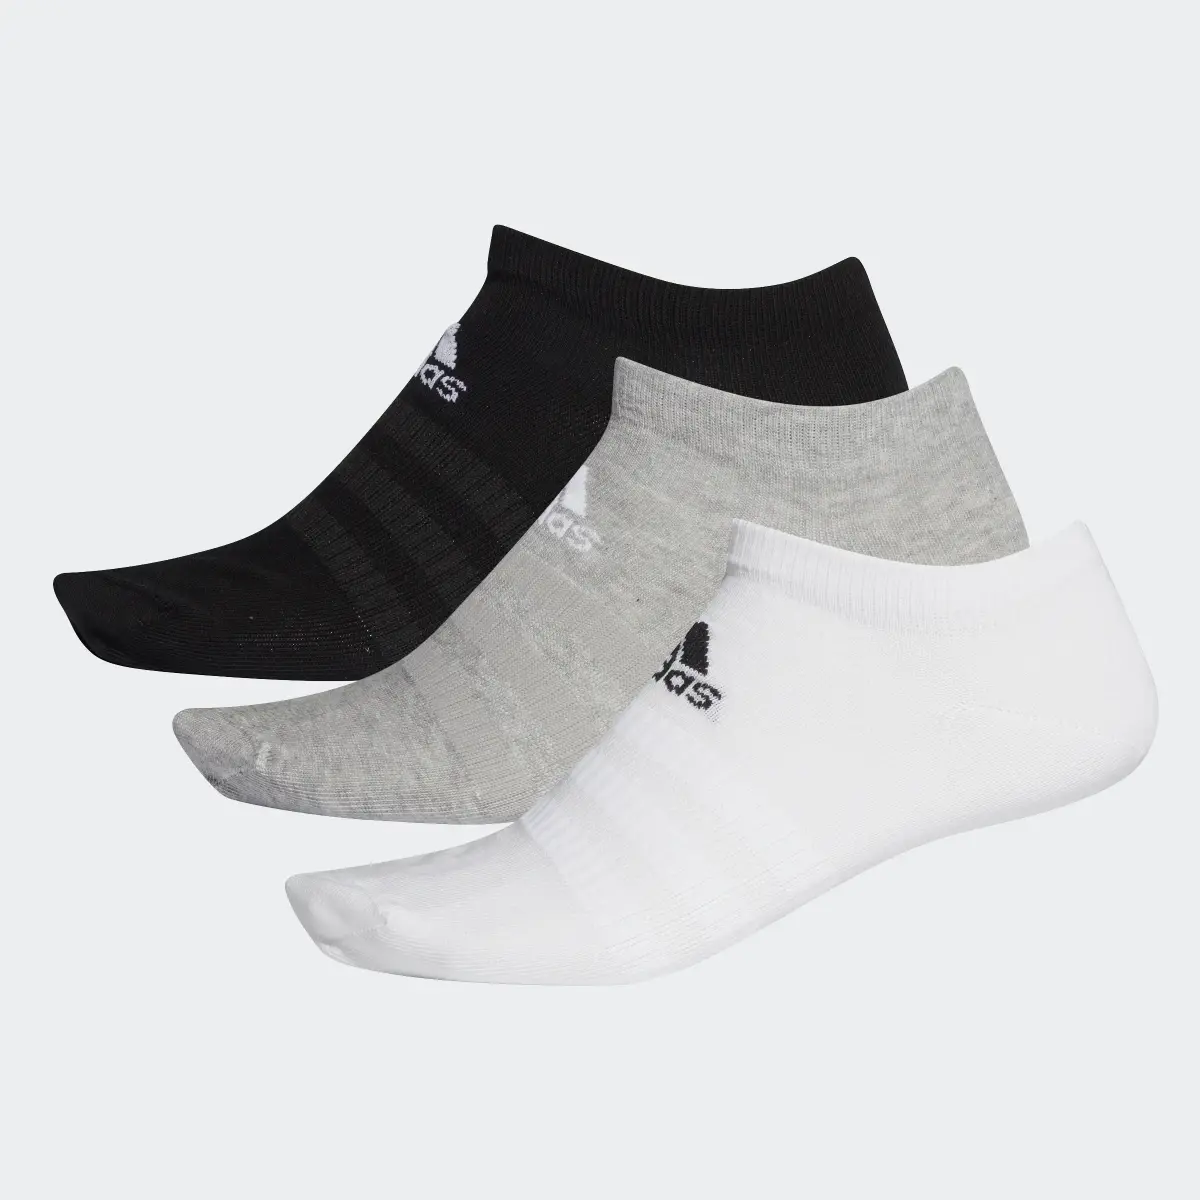 Adidas Low-Cut Socken, 3 Paar. 2